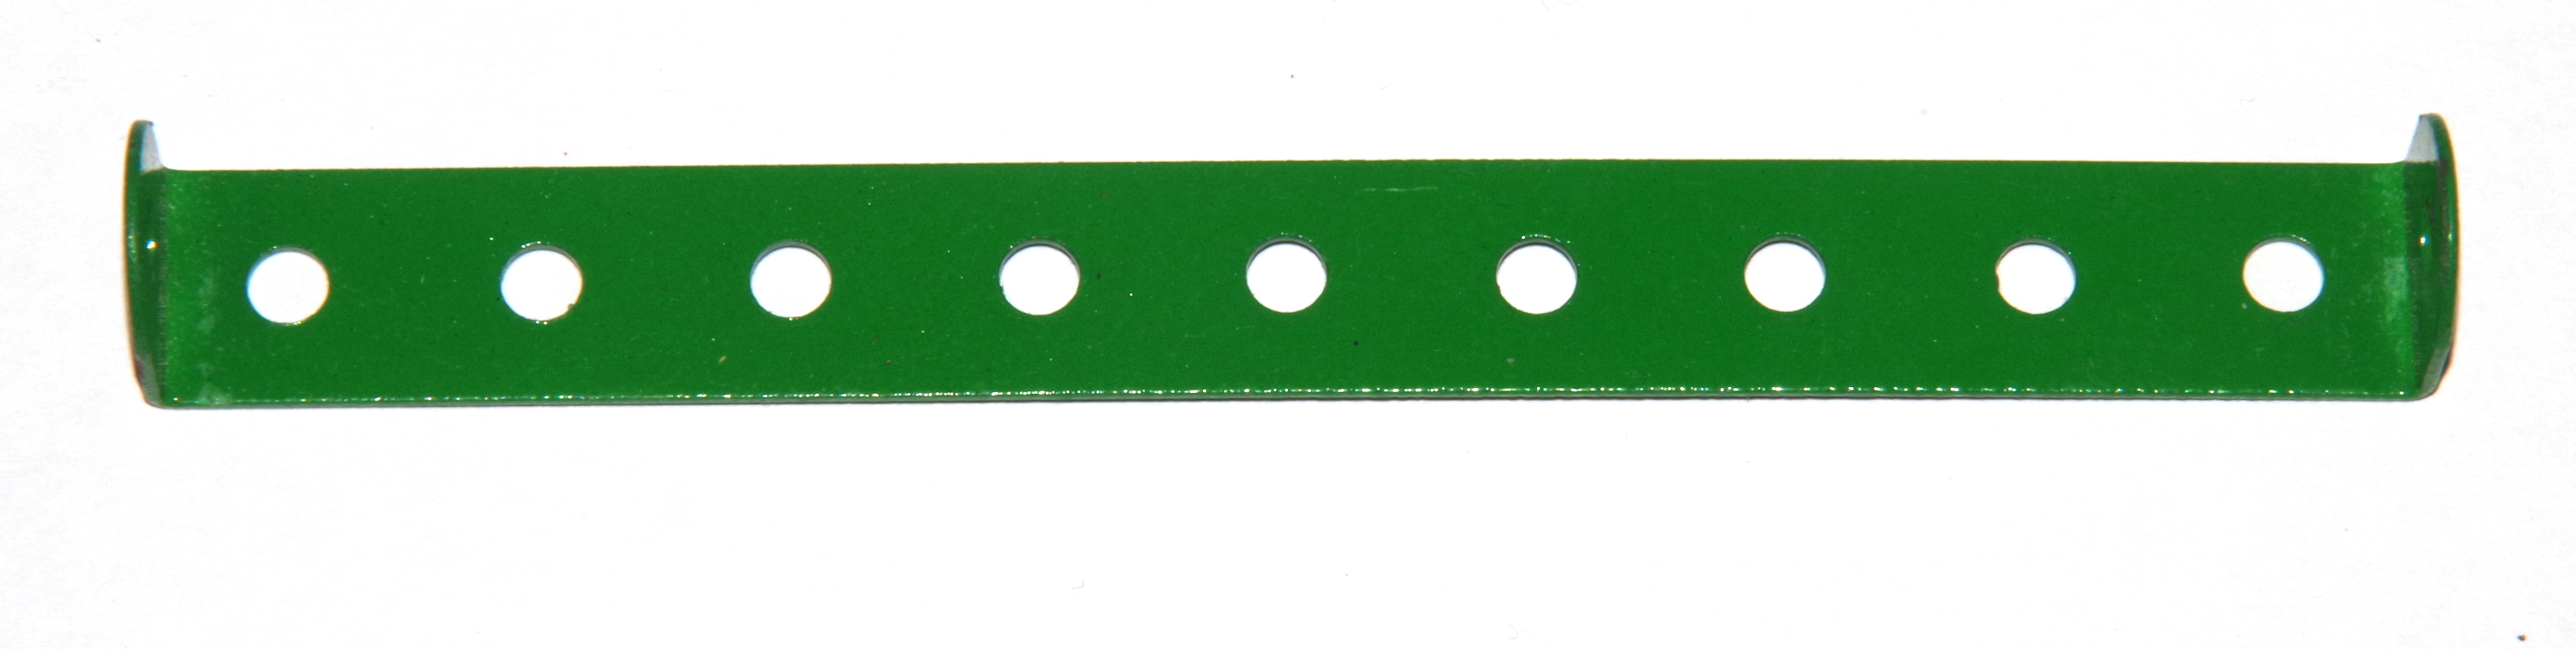 48c Double Angle Strip 1x9x1 Light Green